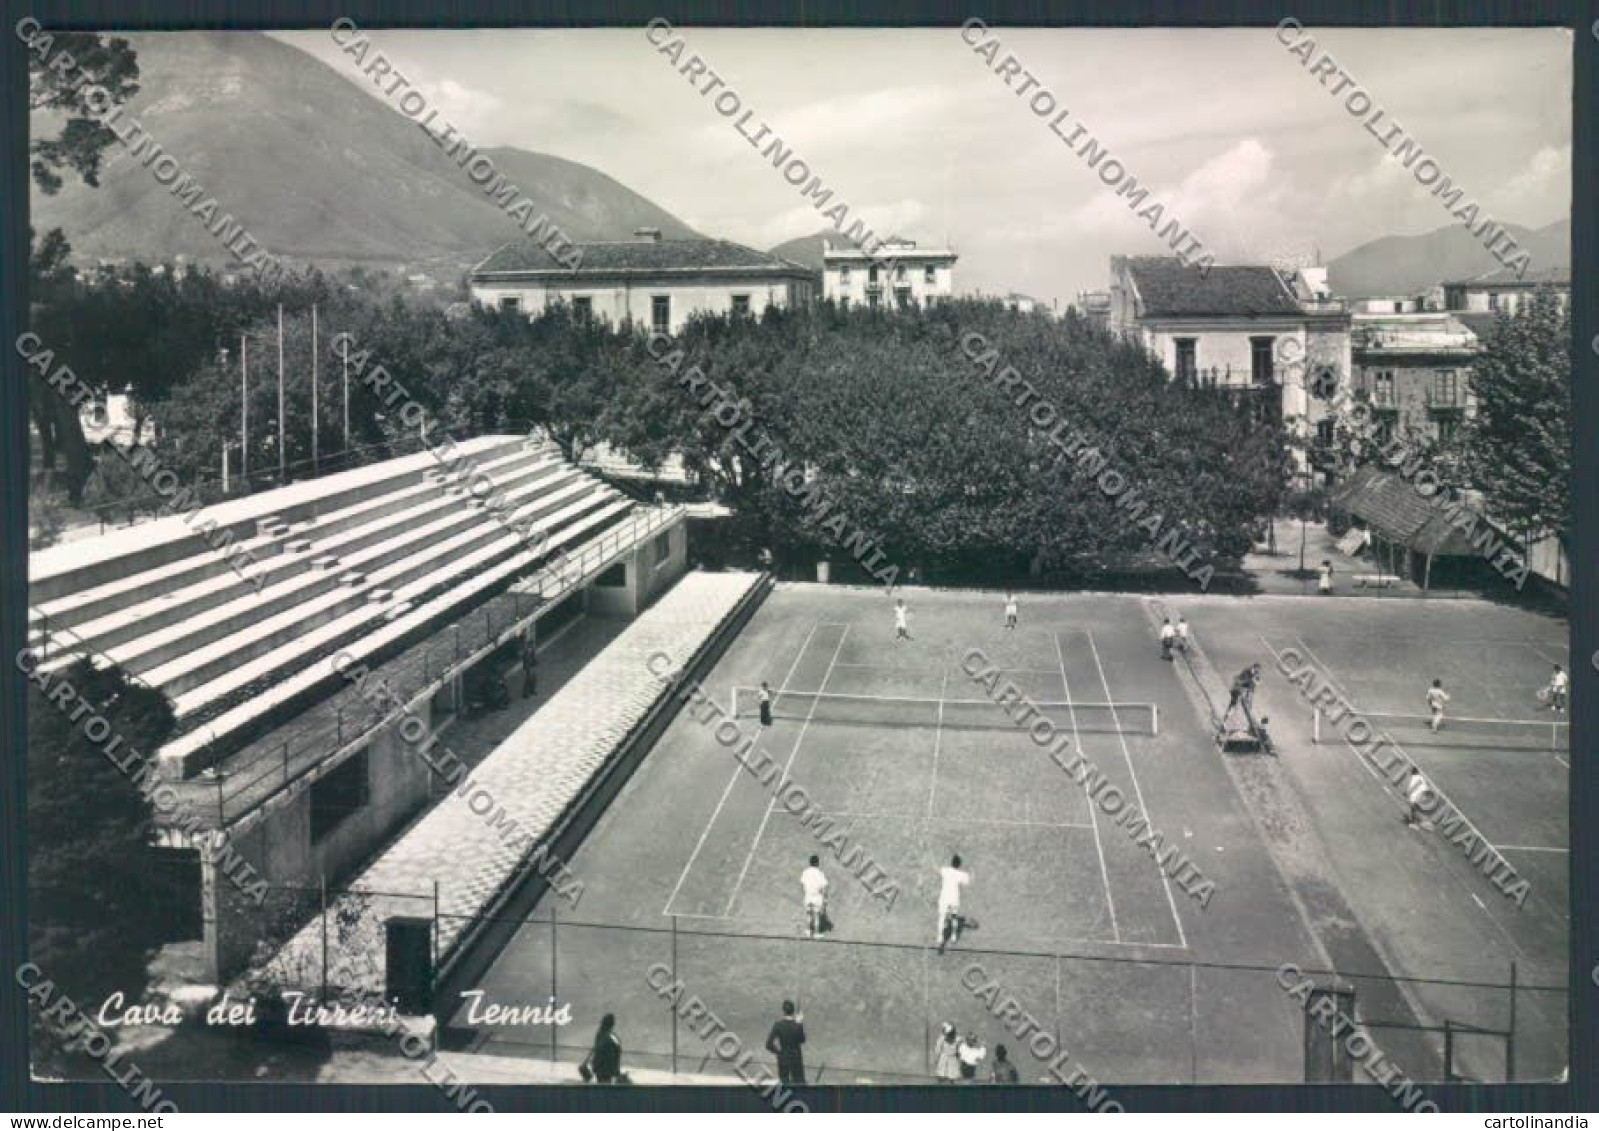 Salerno Cava Dei Tirreni Tennis Foto FG Cartolina ZF6446 - Salerno